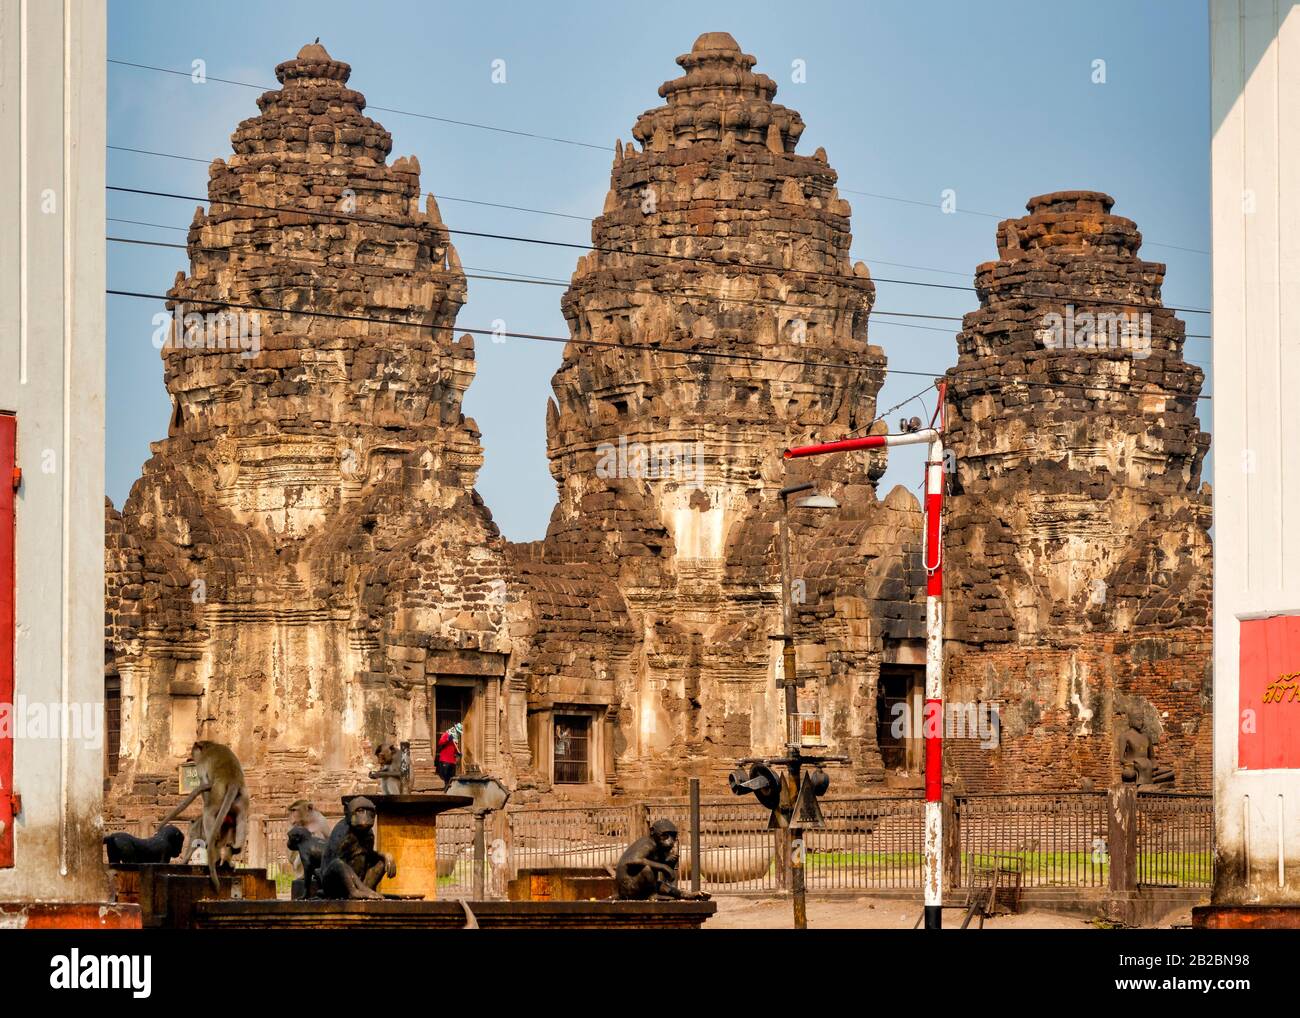 Prang Sam Yod temple in Lopburi, Thailand Stock Photo